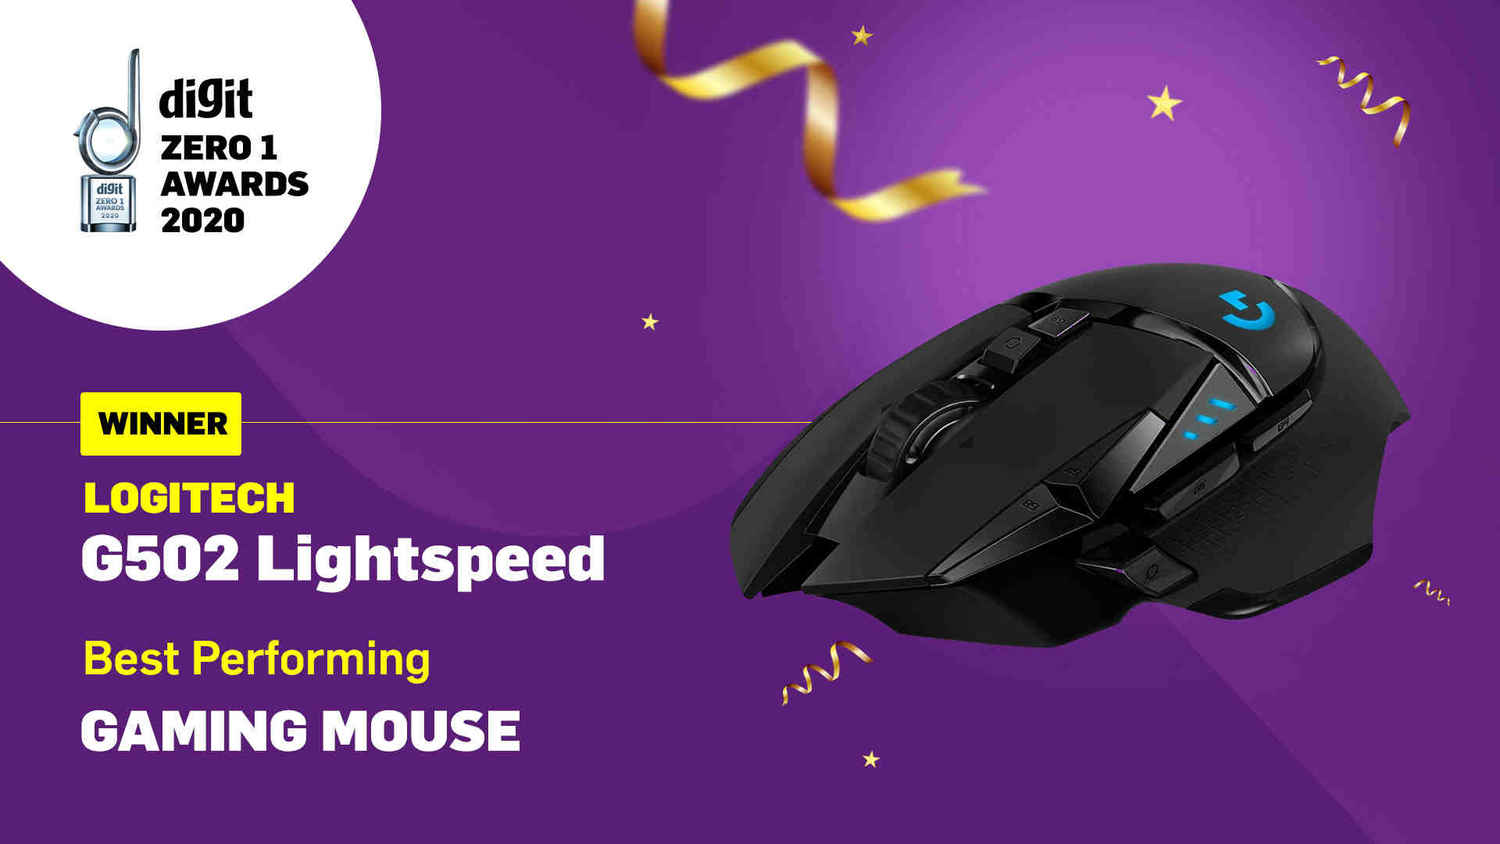 Digit Zero 1 Awards 2020: Best Gaming Mouse